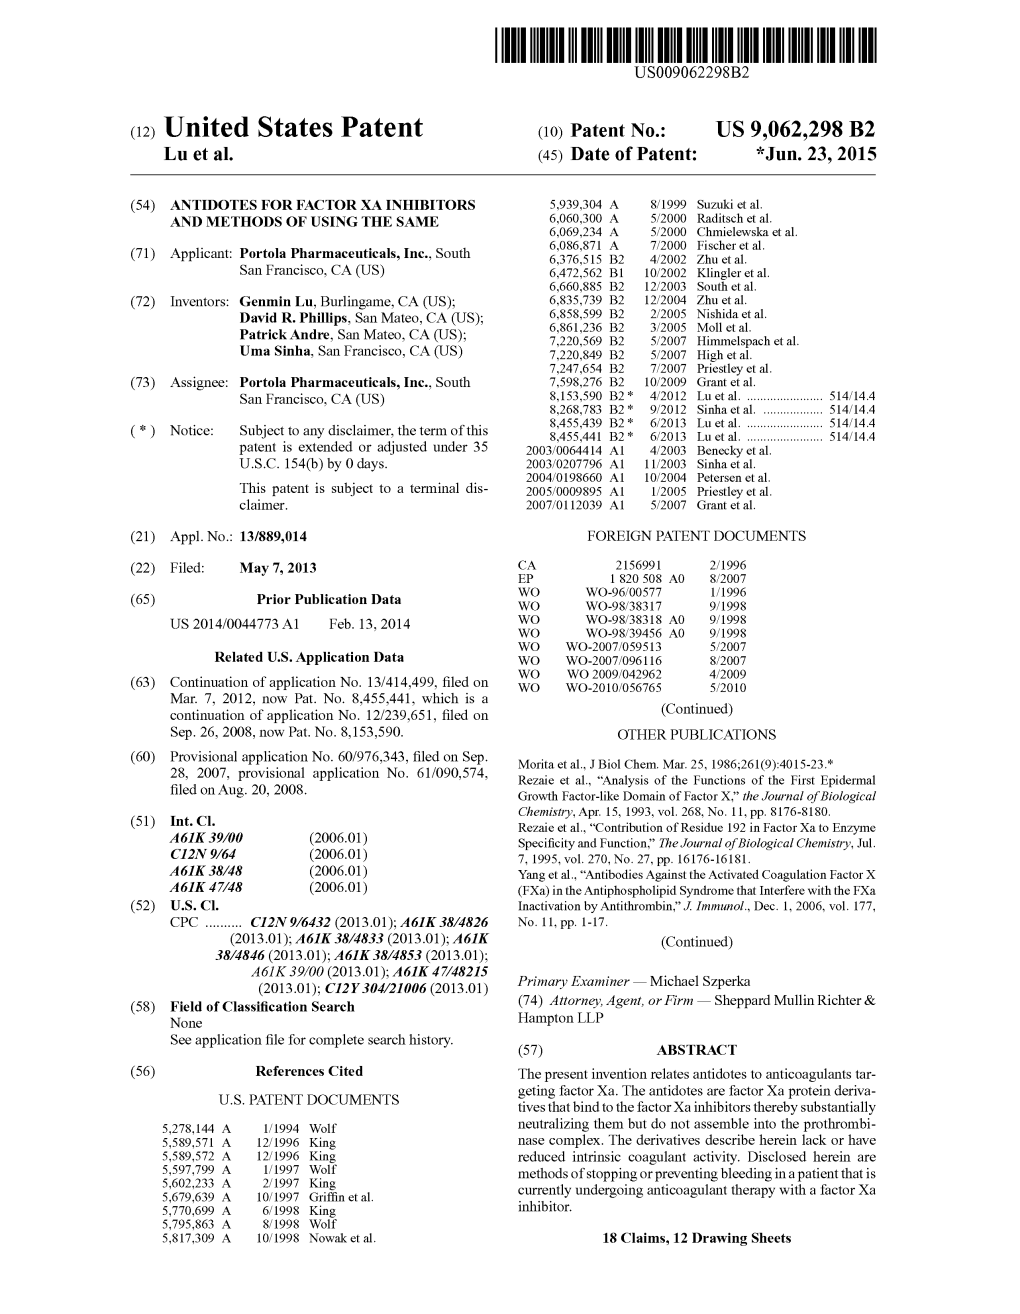 (10) Patent No.: US 9062298 B2